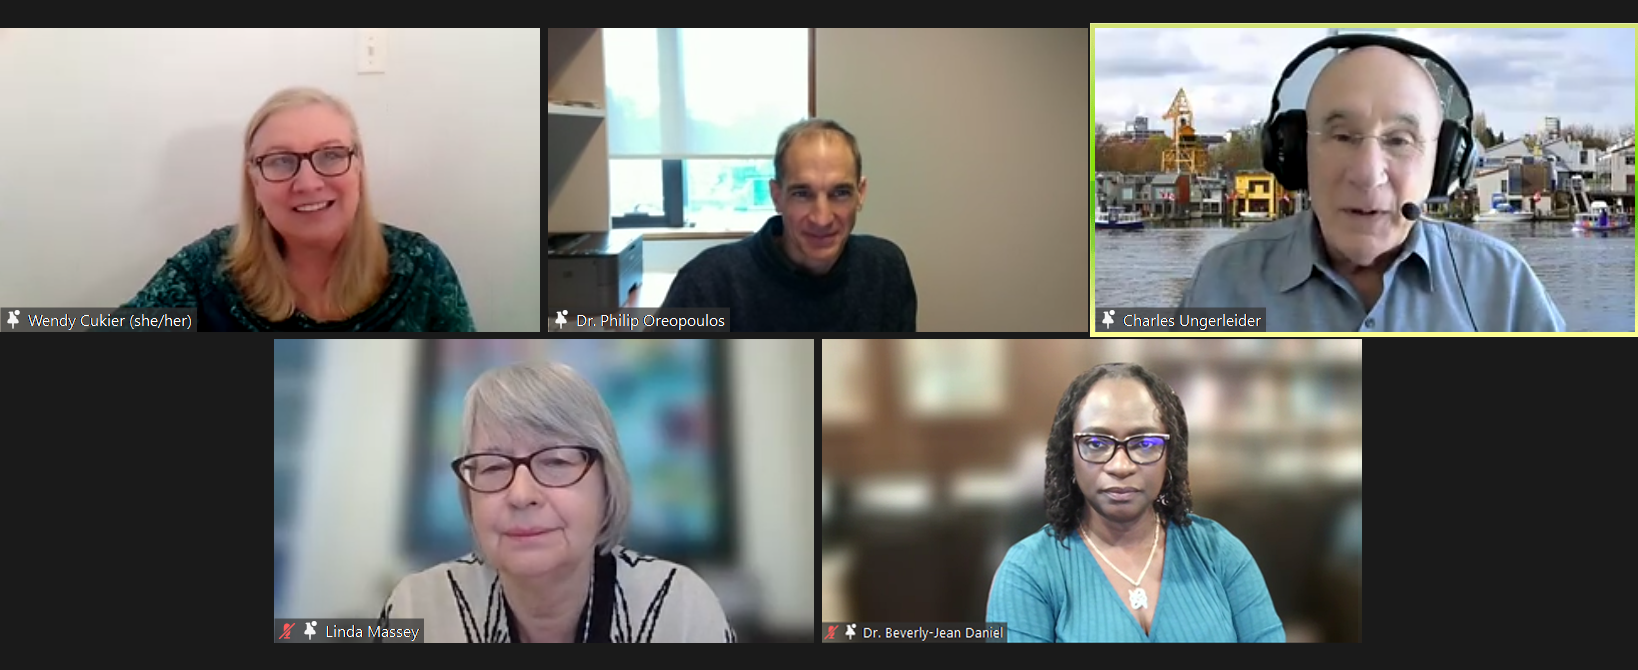 A screenshot of panel speakers Wendy Cukier, Philip Oreopoulos, Charles Ungerleider, Linda Massey, and Beverly-Jean Daniel on Zoom with Ungerleider speaking